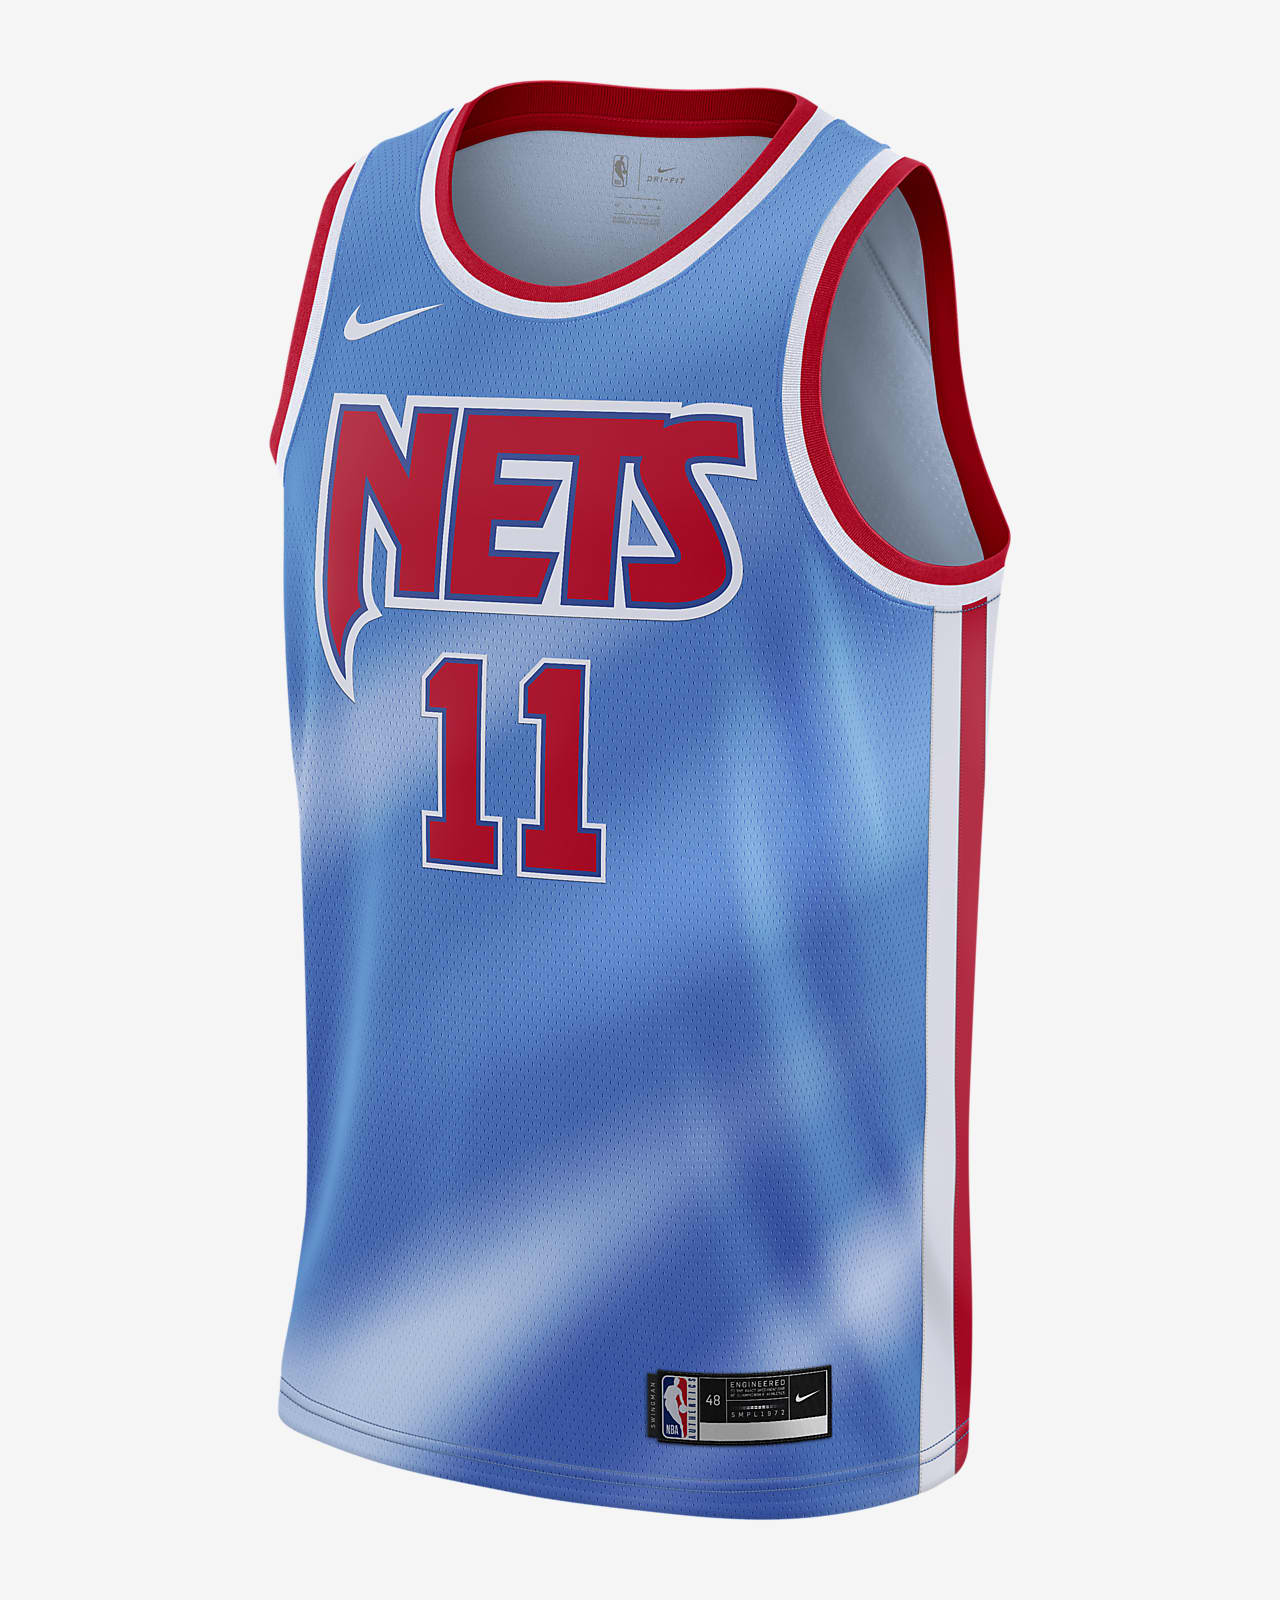 Camiseta Nike NBA Swingman Kyrie Irving Brooklyn Nets Classic Edition 2020.  Nike.com